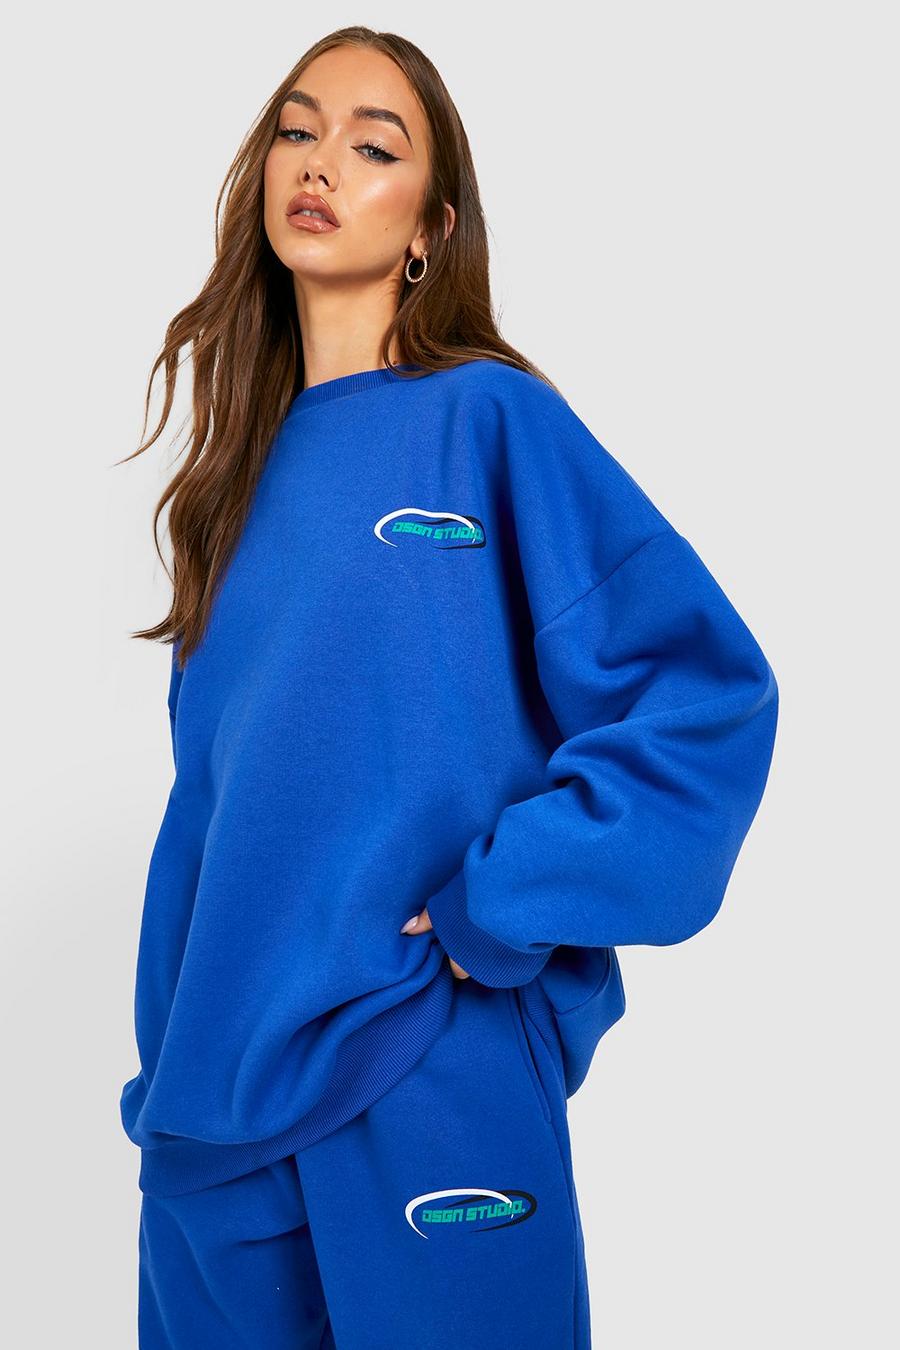 Cobalt blue Dsgn Studio Slogan Printed Sweater Tracksuit